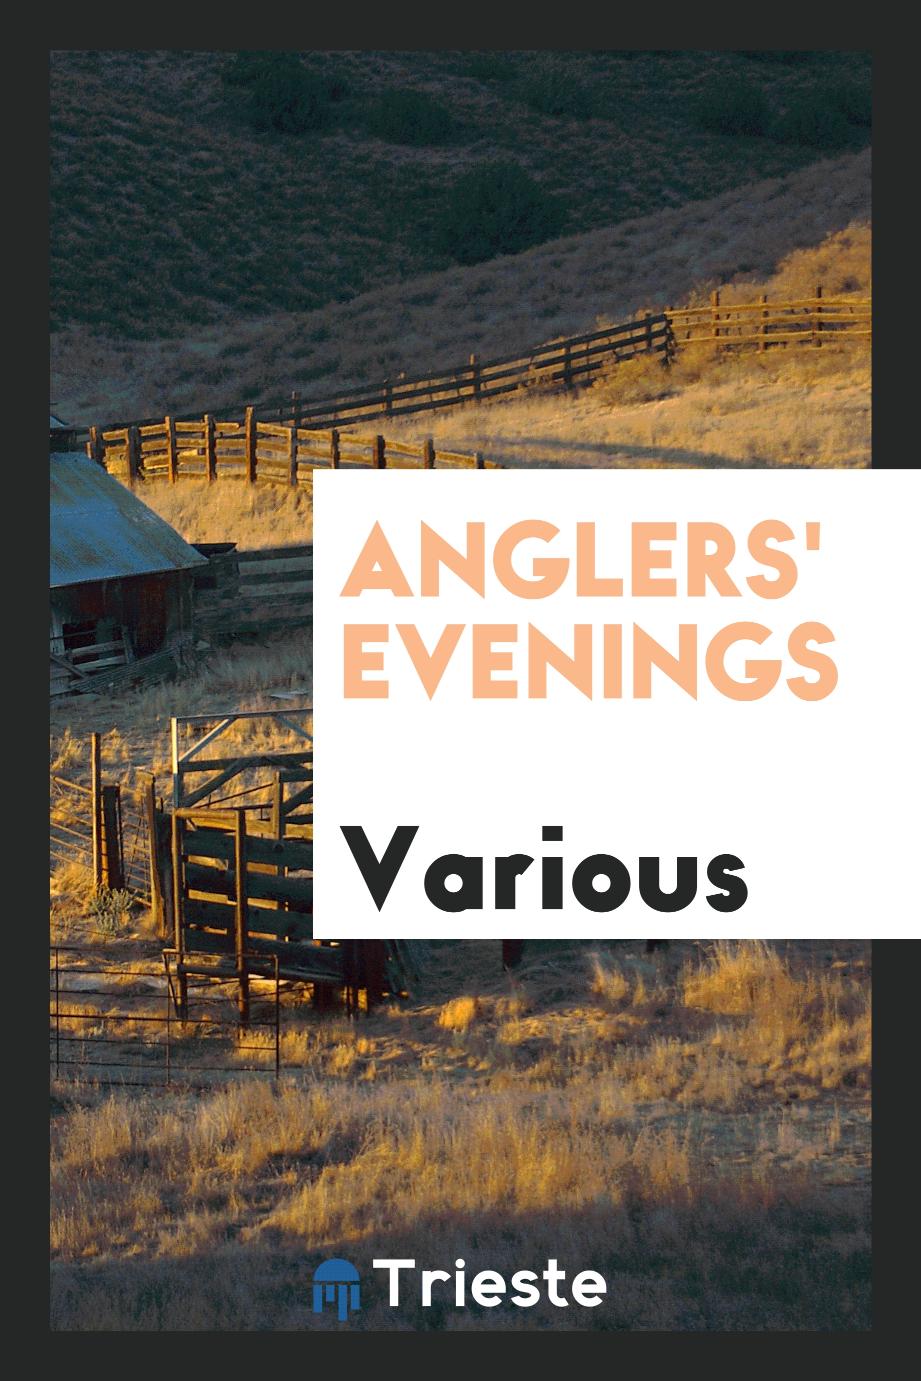 Anglers' evenings